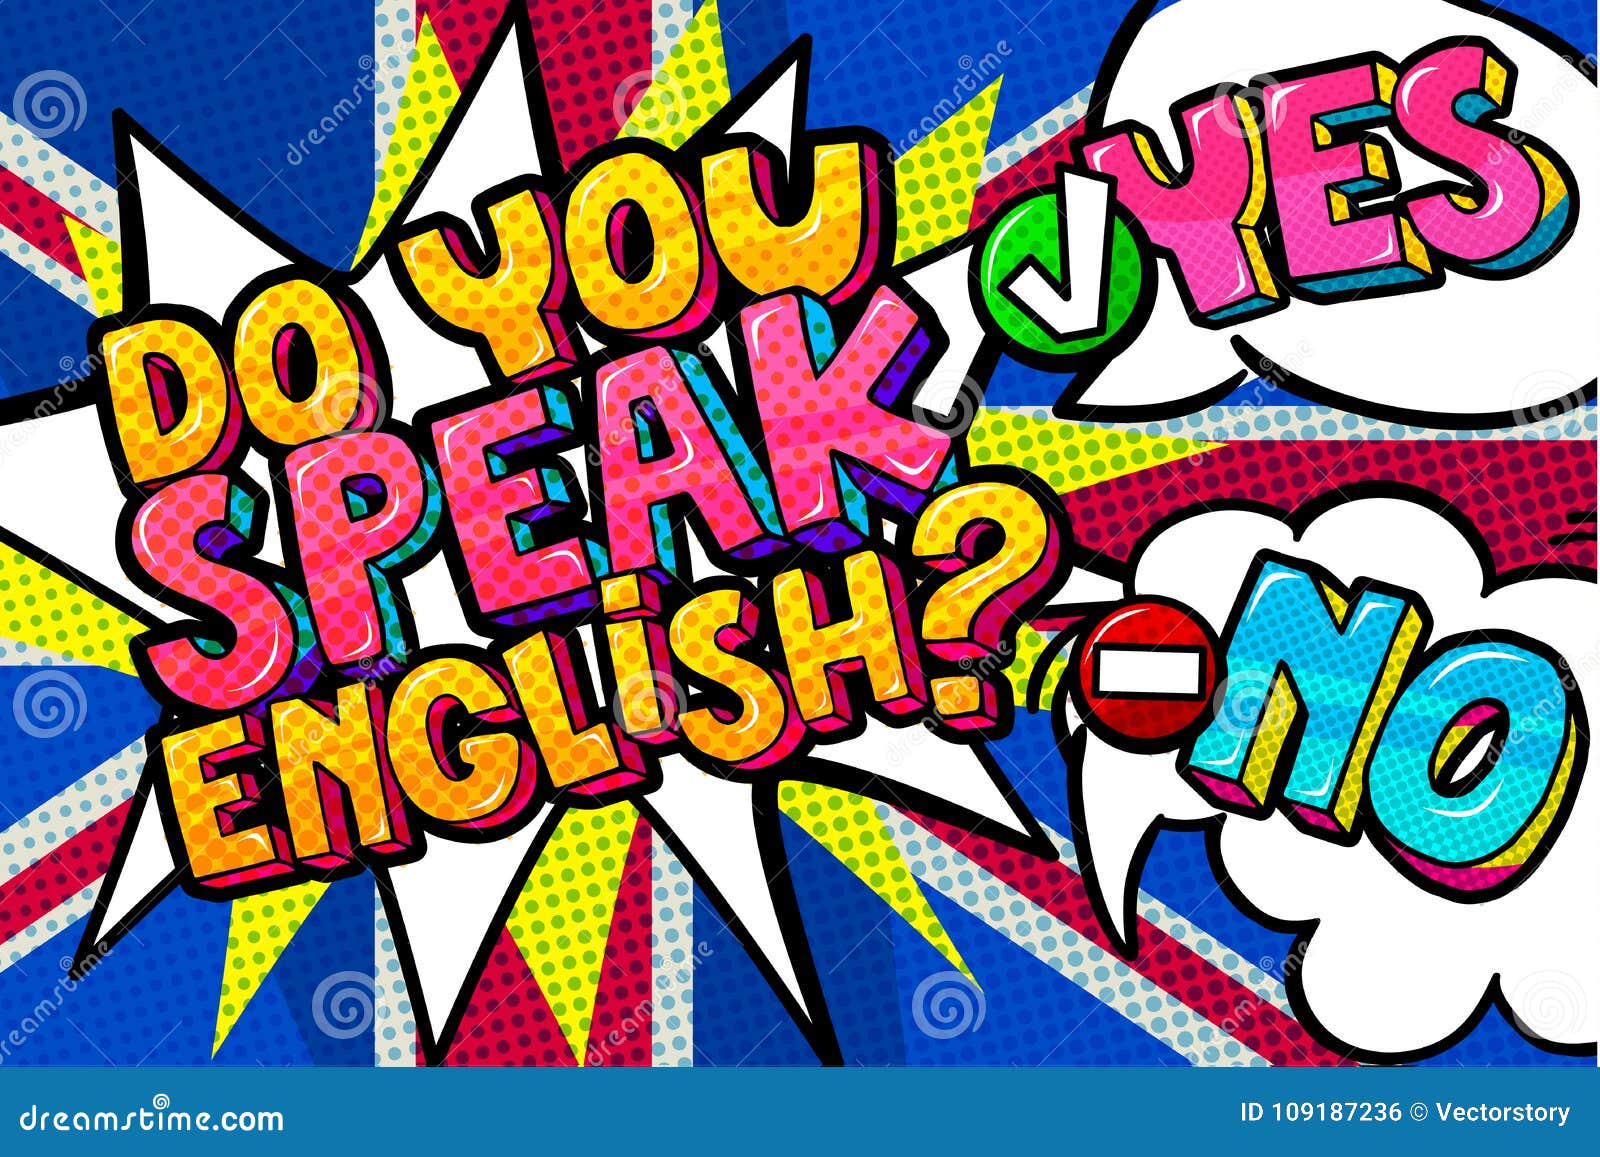 Do you speak english yes. Английский поп. Классический поп английский. Pop на английском. Английский стиль арт.